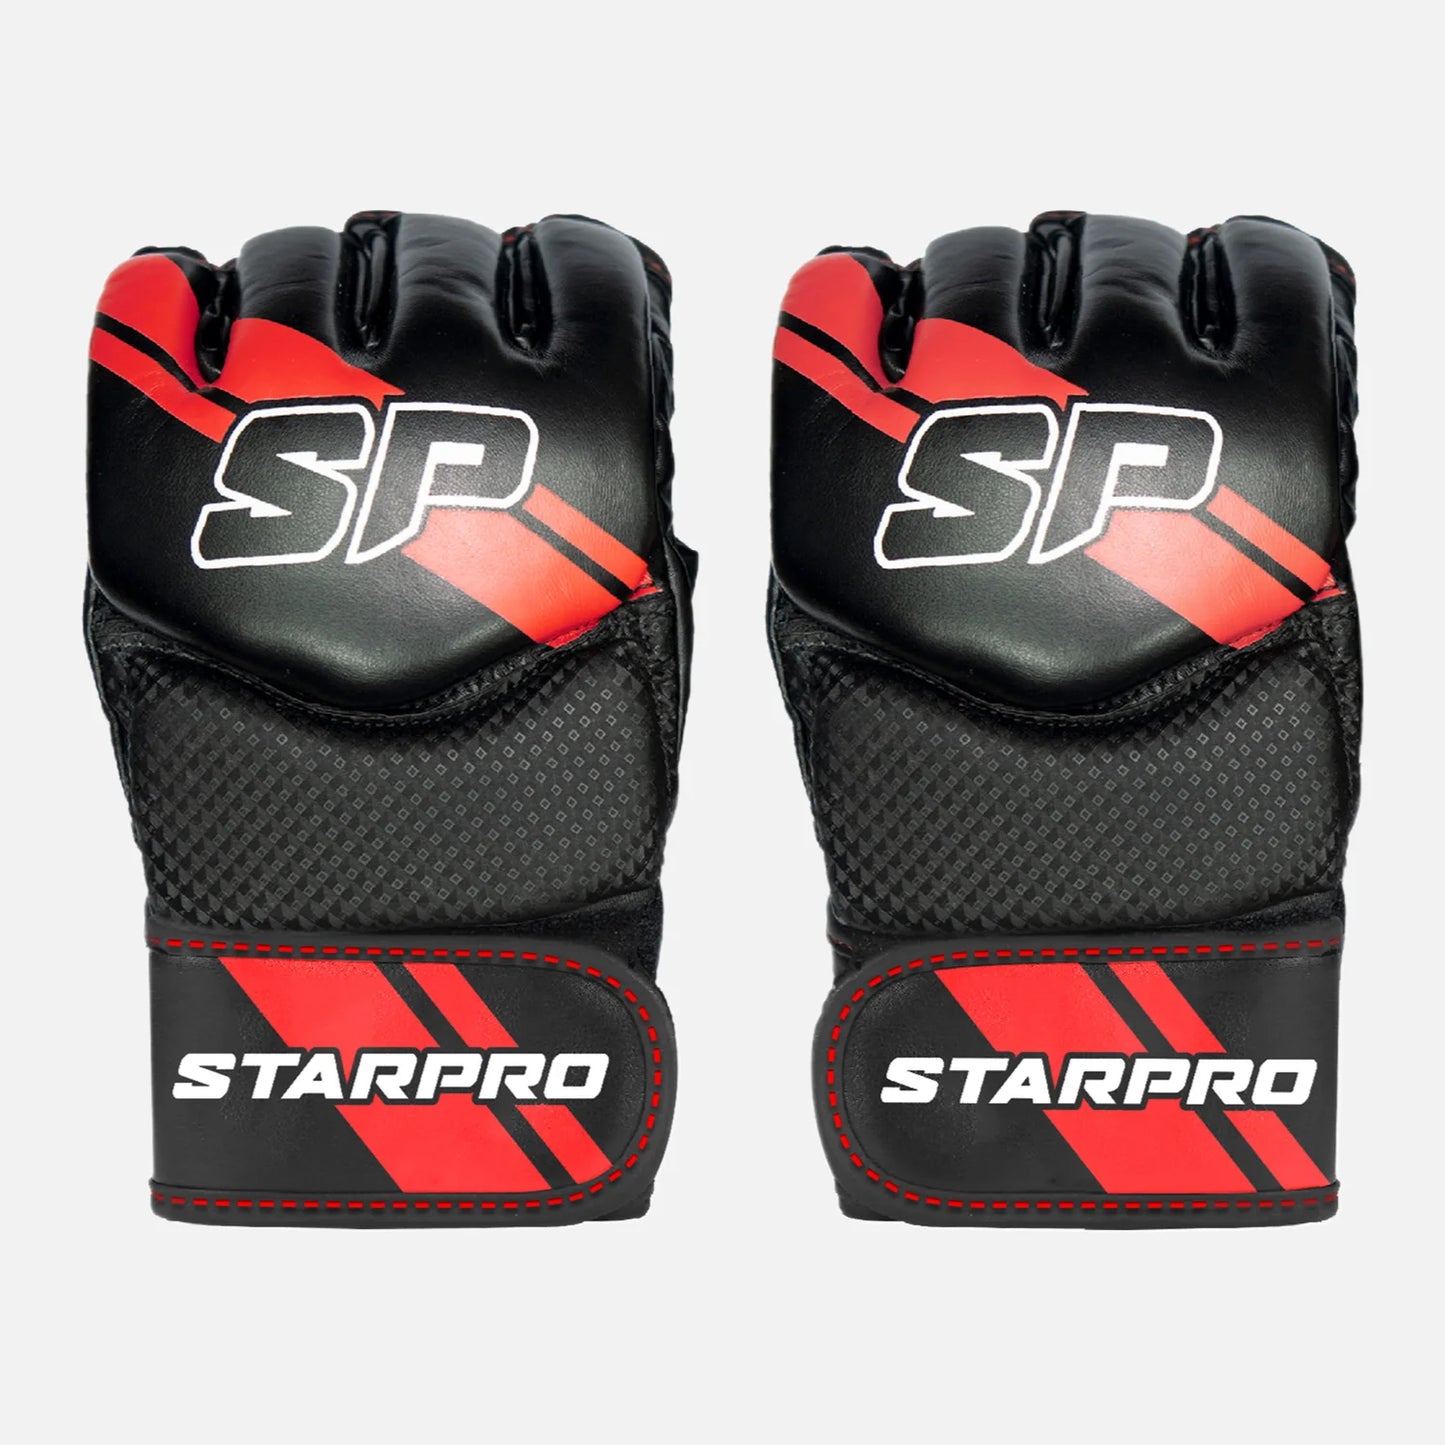 Beginner MMA Grappling Gloves